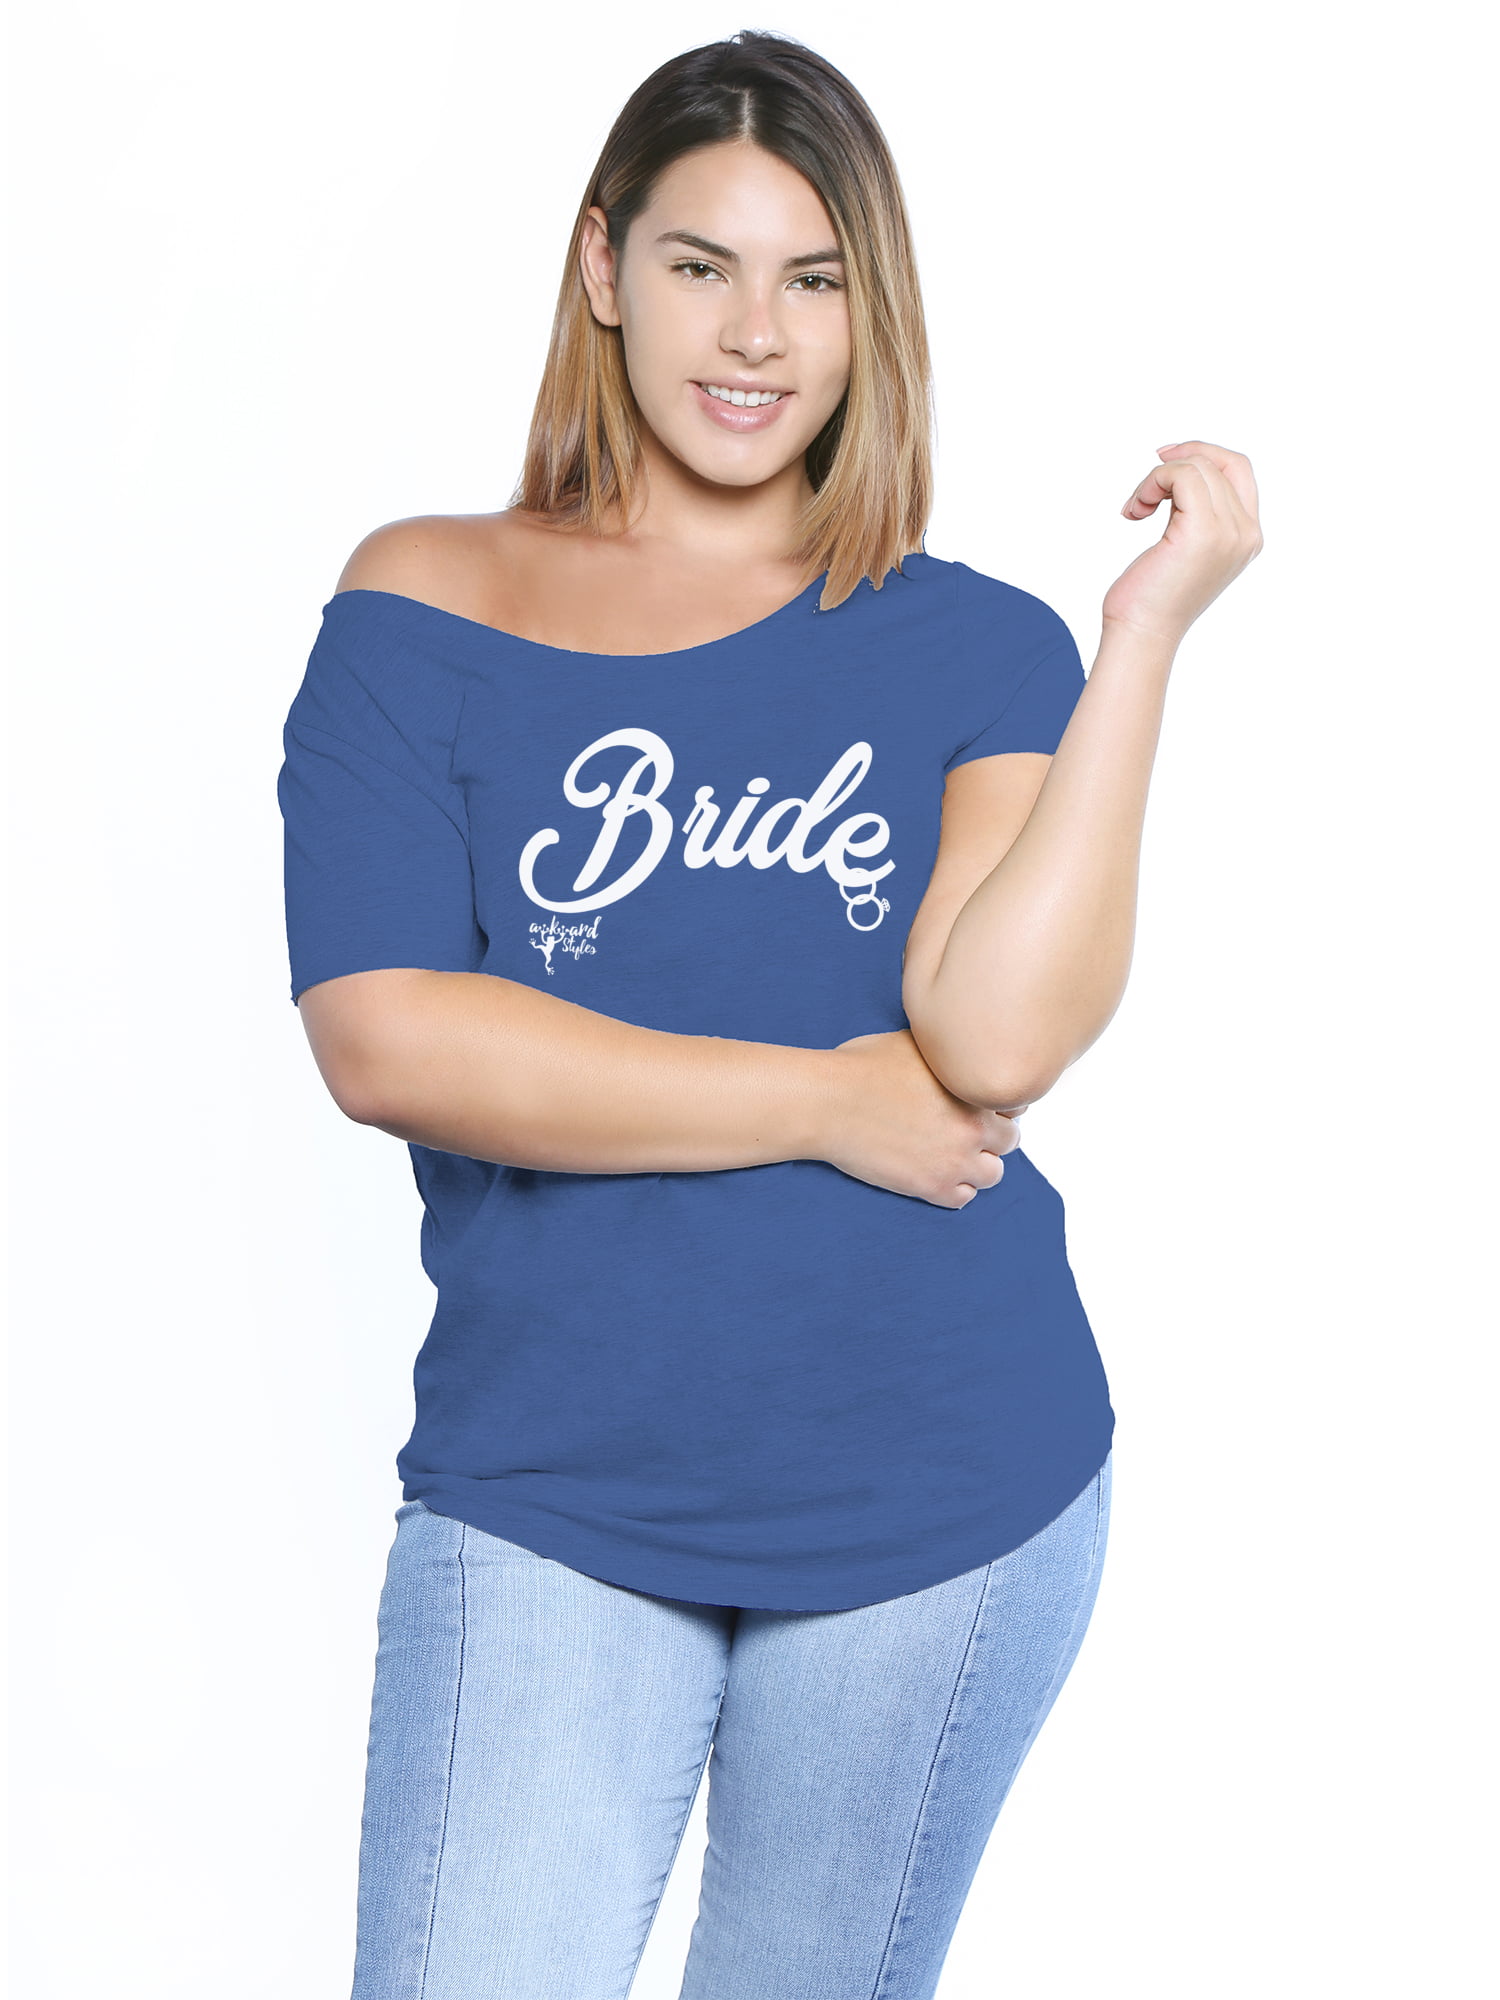 Nautical Bride Shirt Nautical Beach Wedding Aqua Blue print Slouchy Oversized Tee Shirt